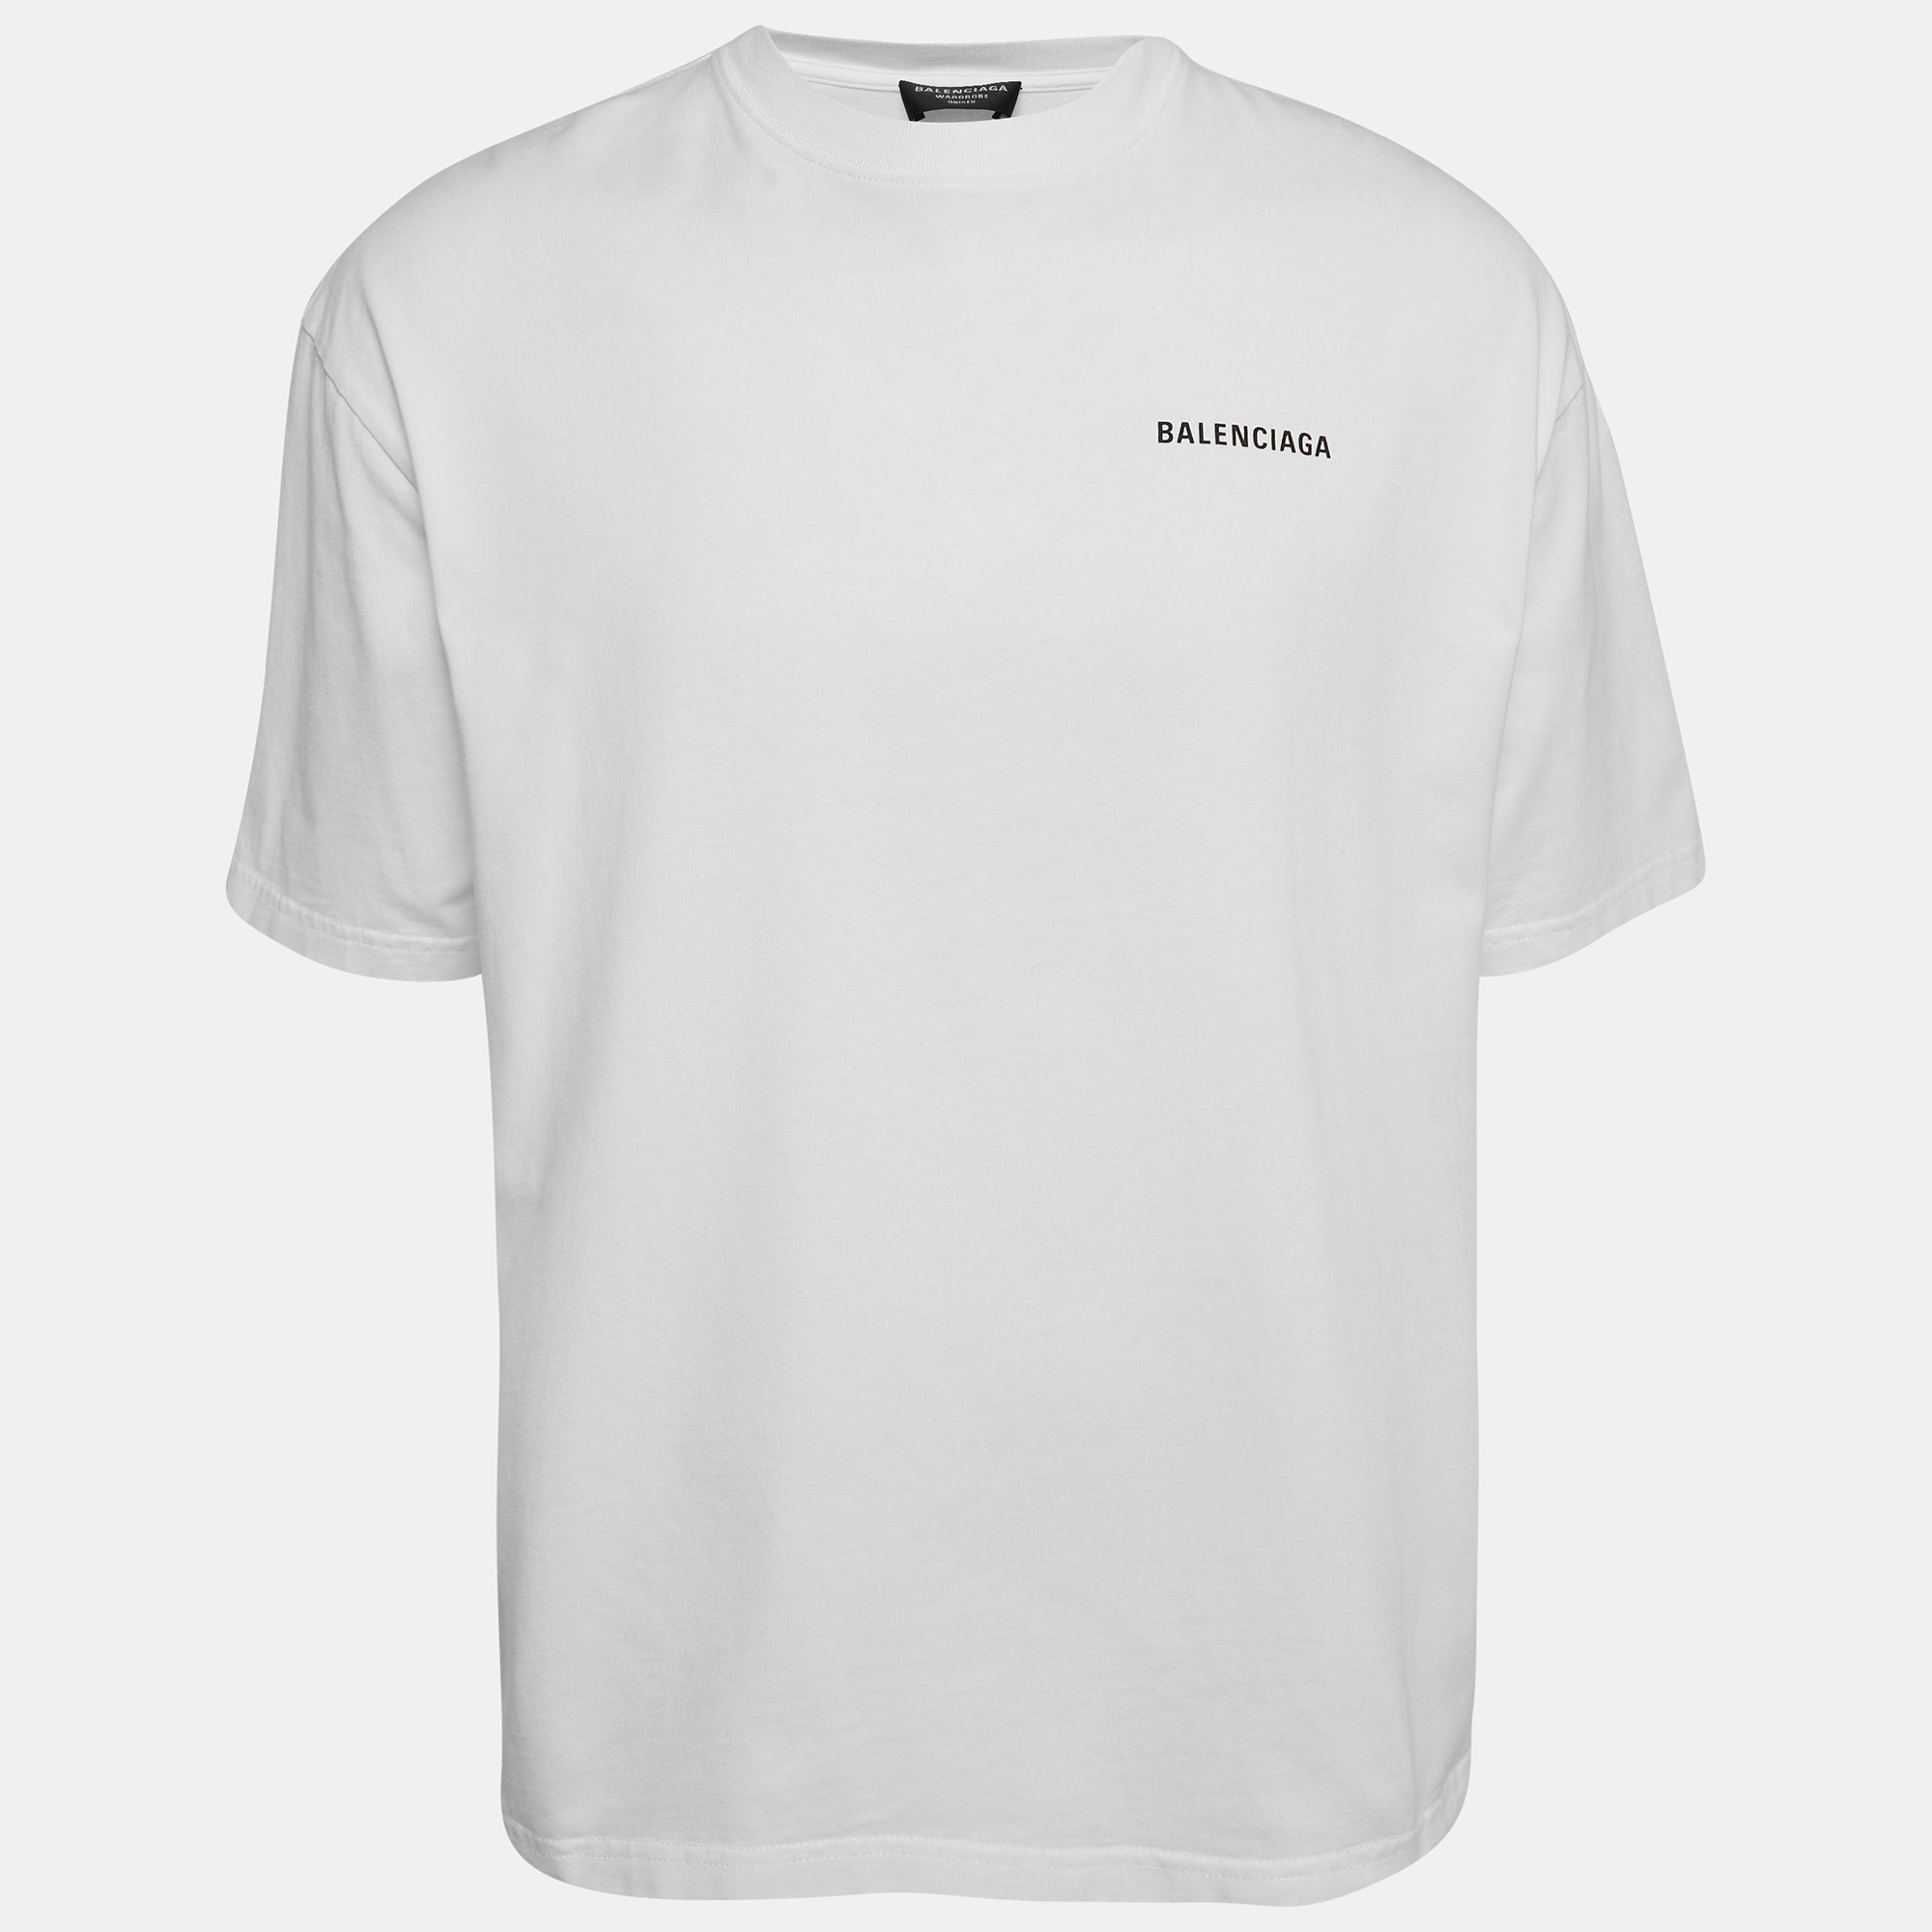 Balenciaga white printed cotton oversized t-shirt s